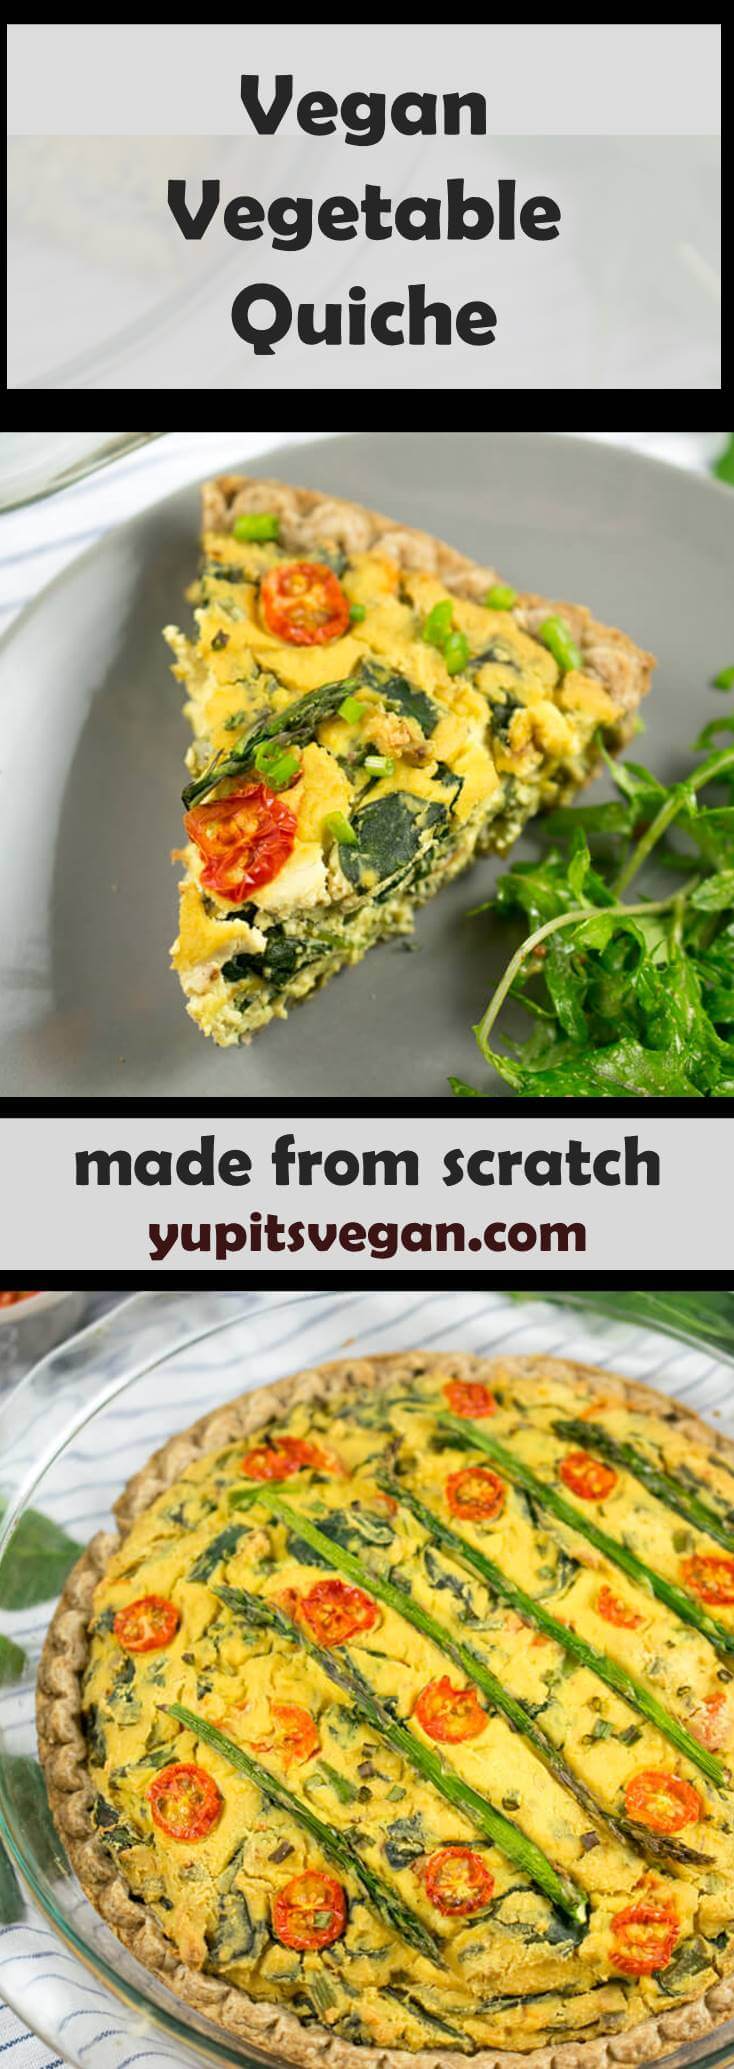 Vegan Quiche with Garden Vegetables | Chickpea Tofu Quiche Recipe